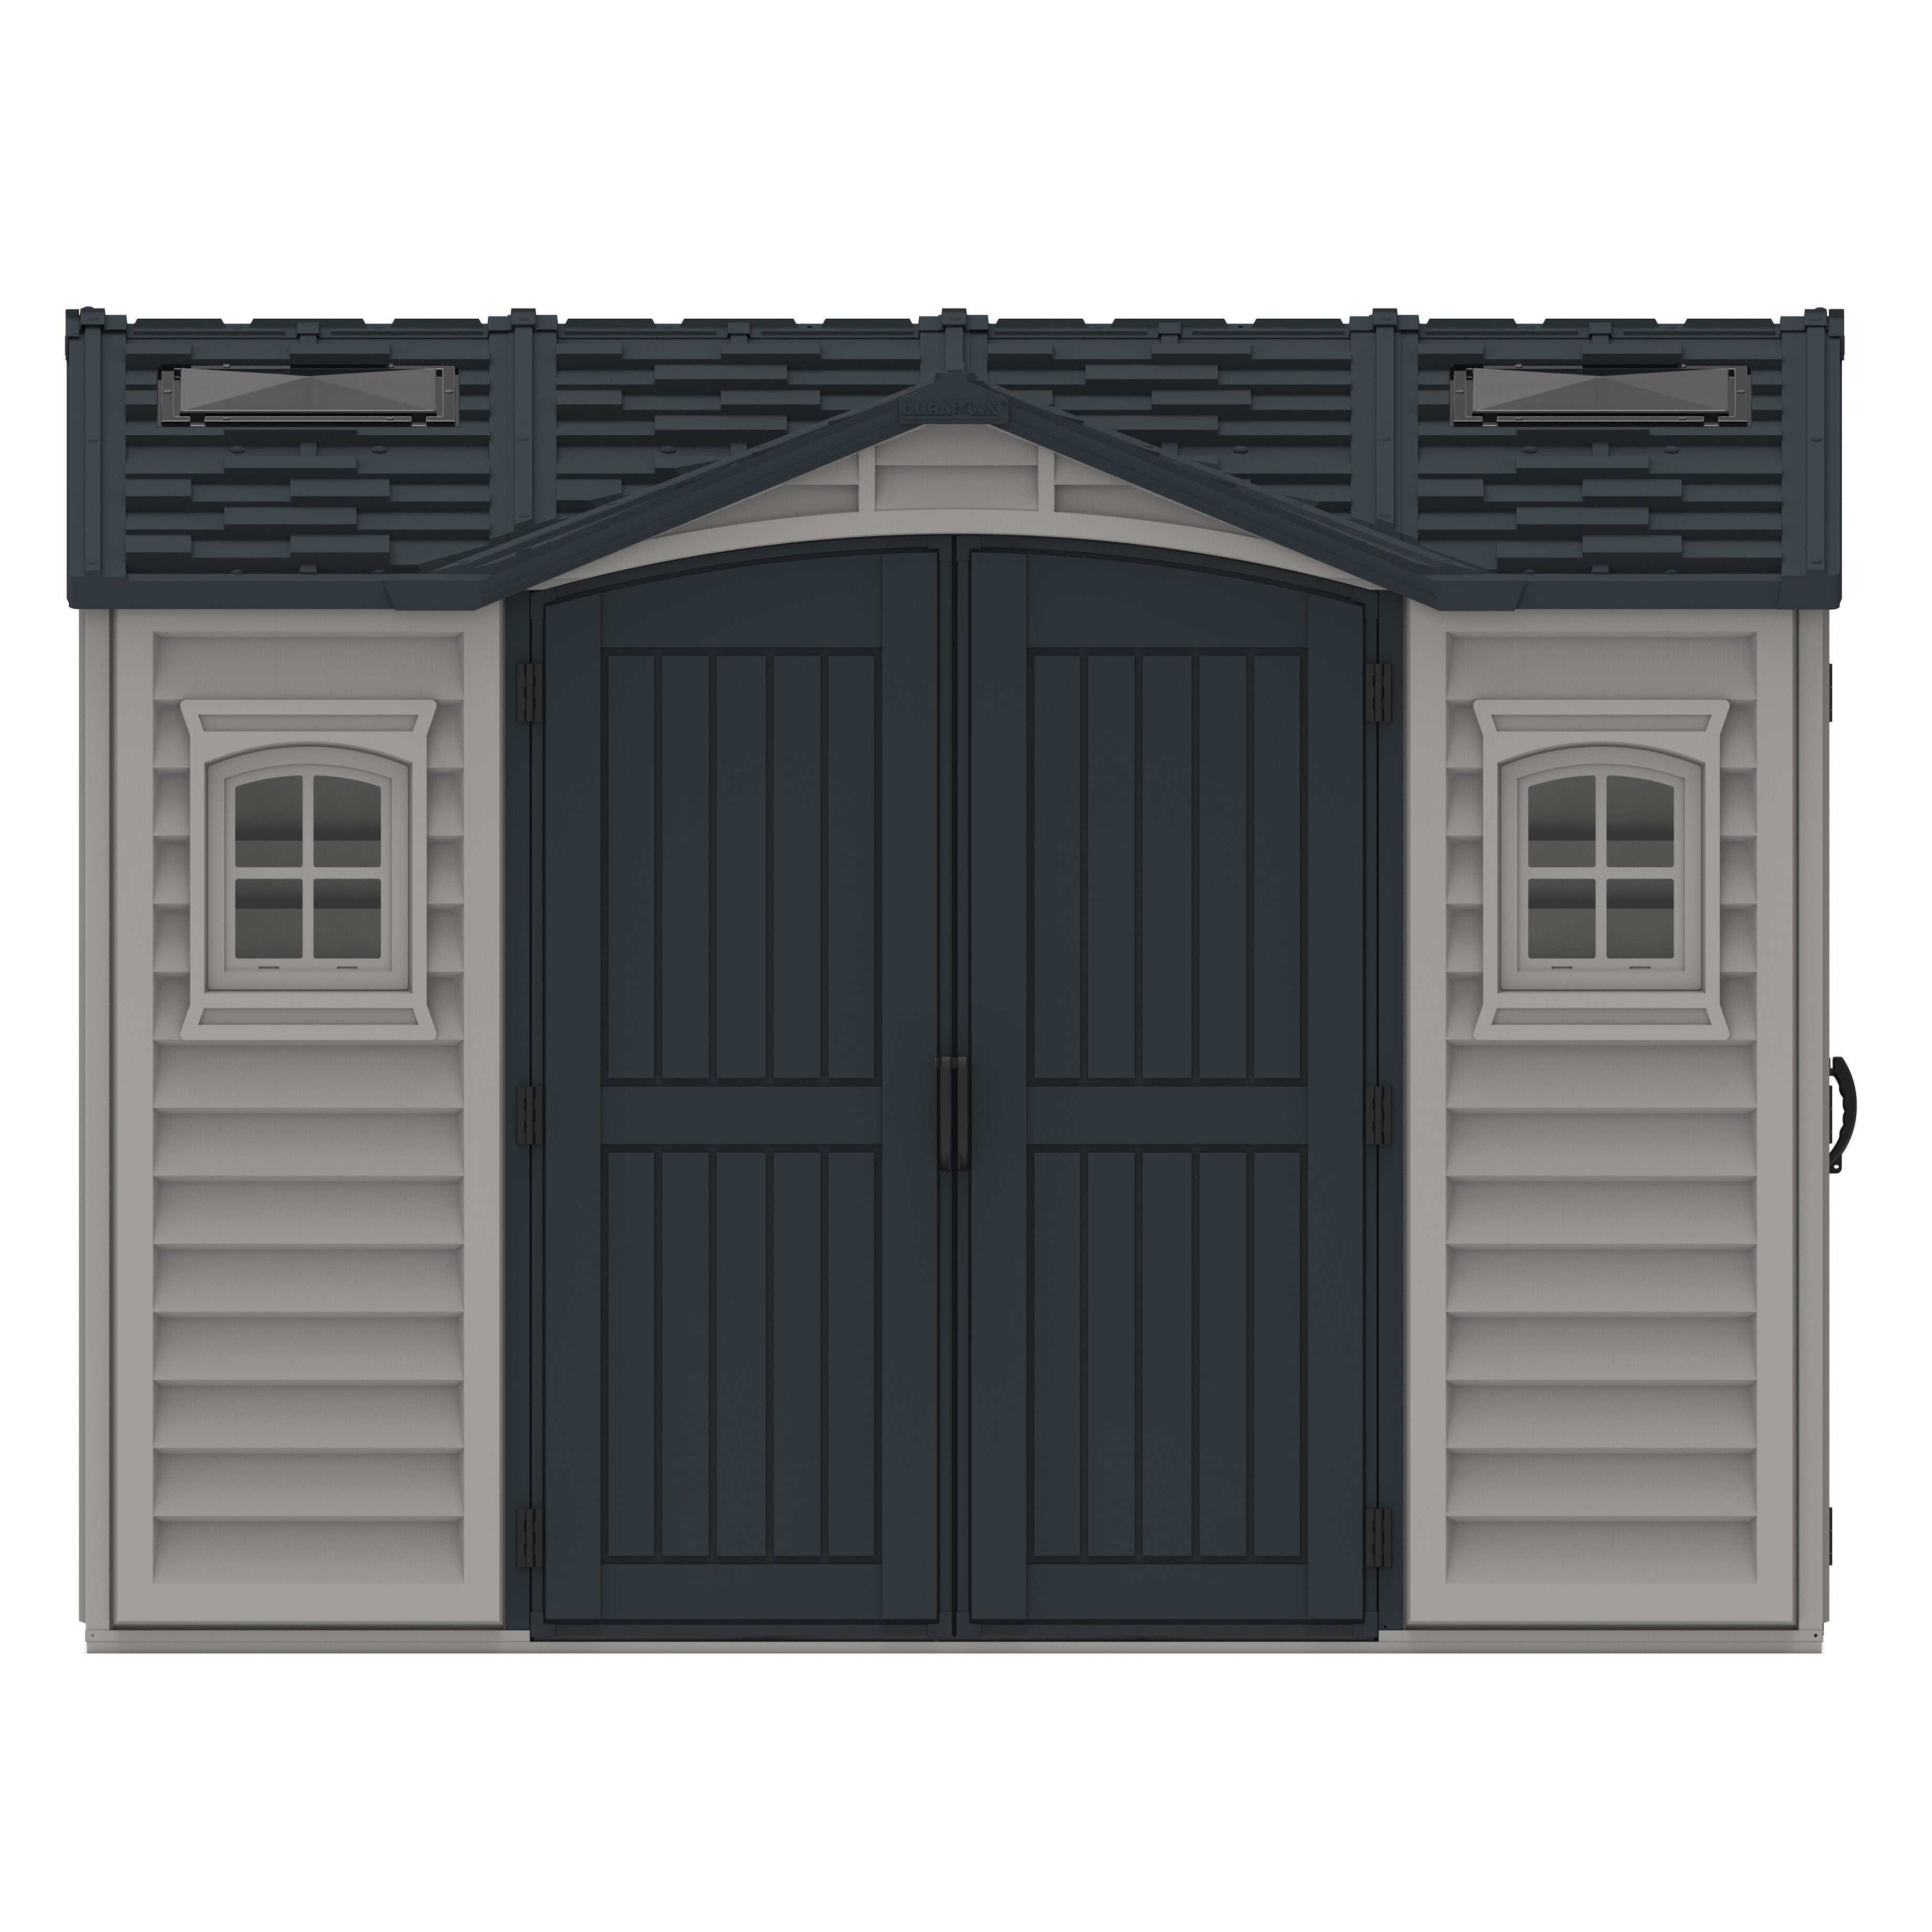 8' x 8' Portable Garage Outdoor Storage-Gray